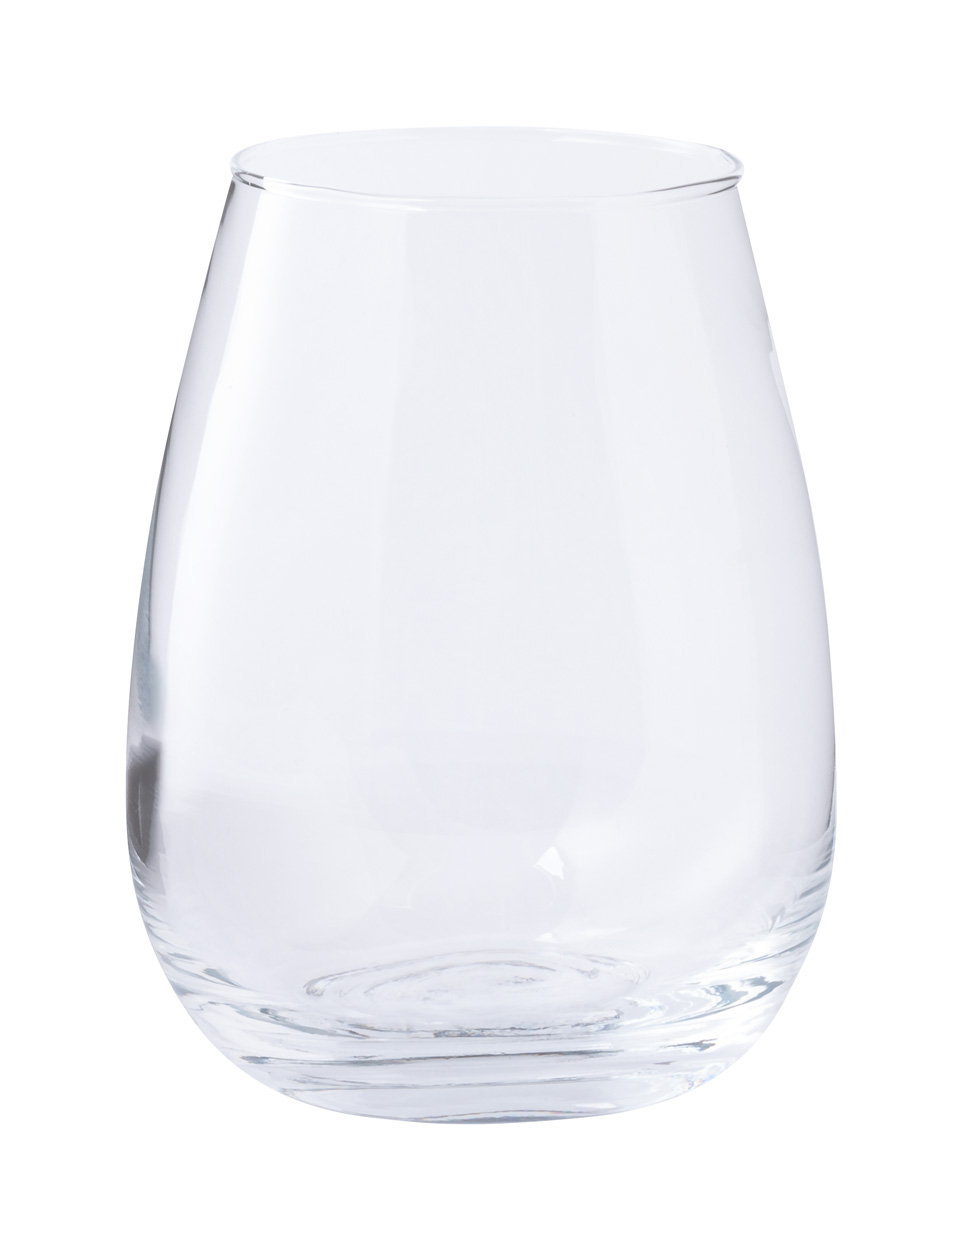 Hernan drinking glasses - transparent